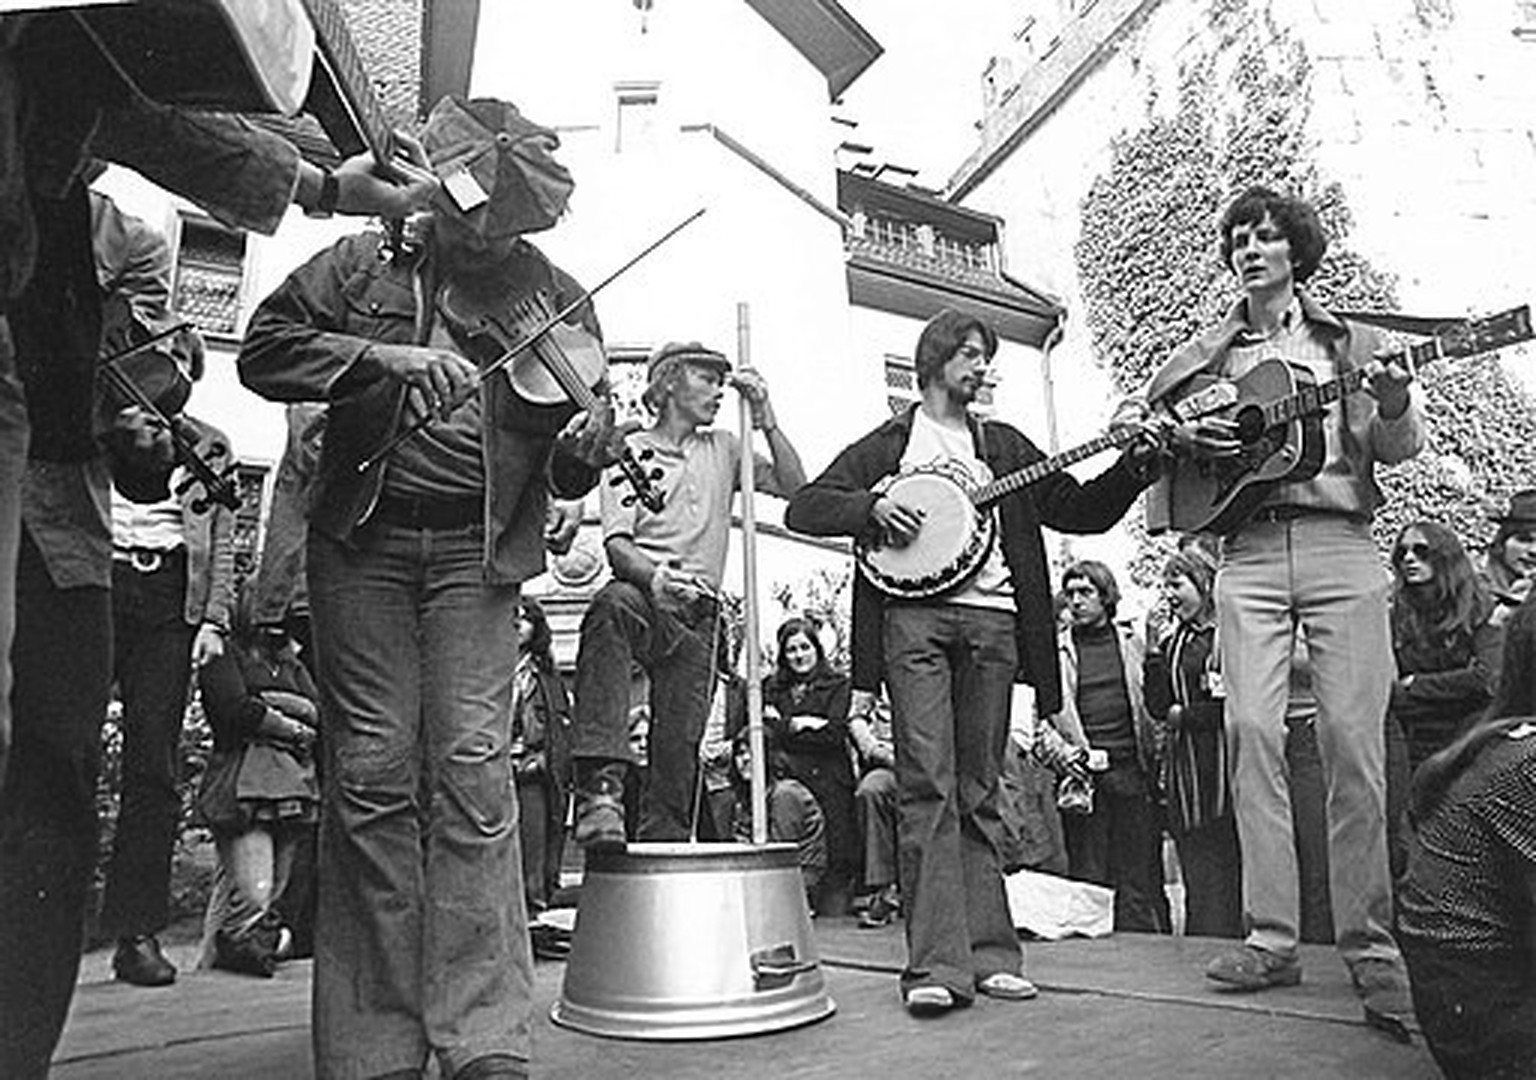 Folkfestival auf der Lenzbrg, 1972